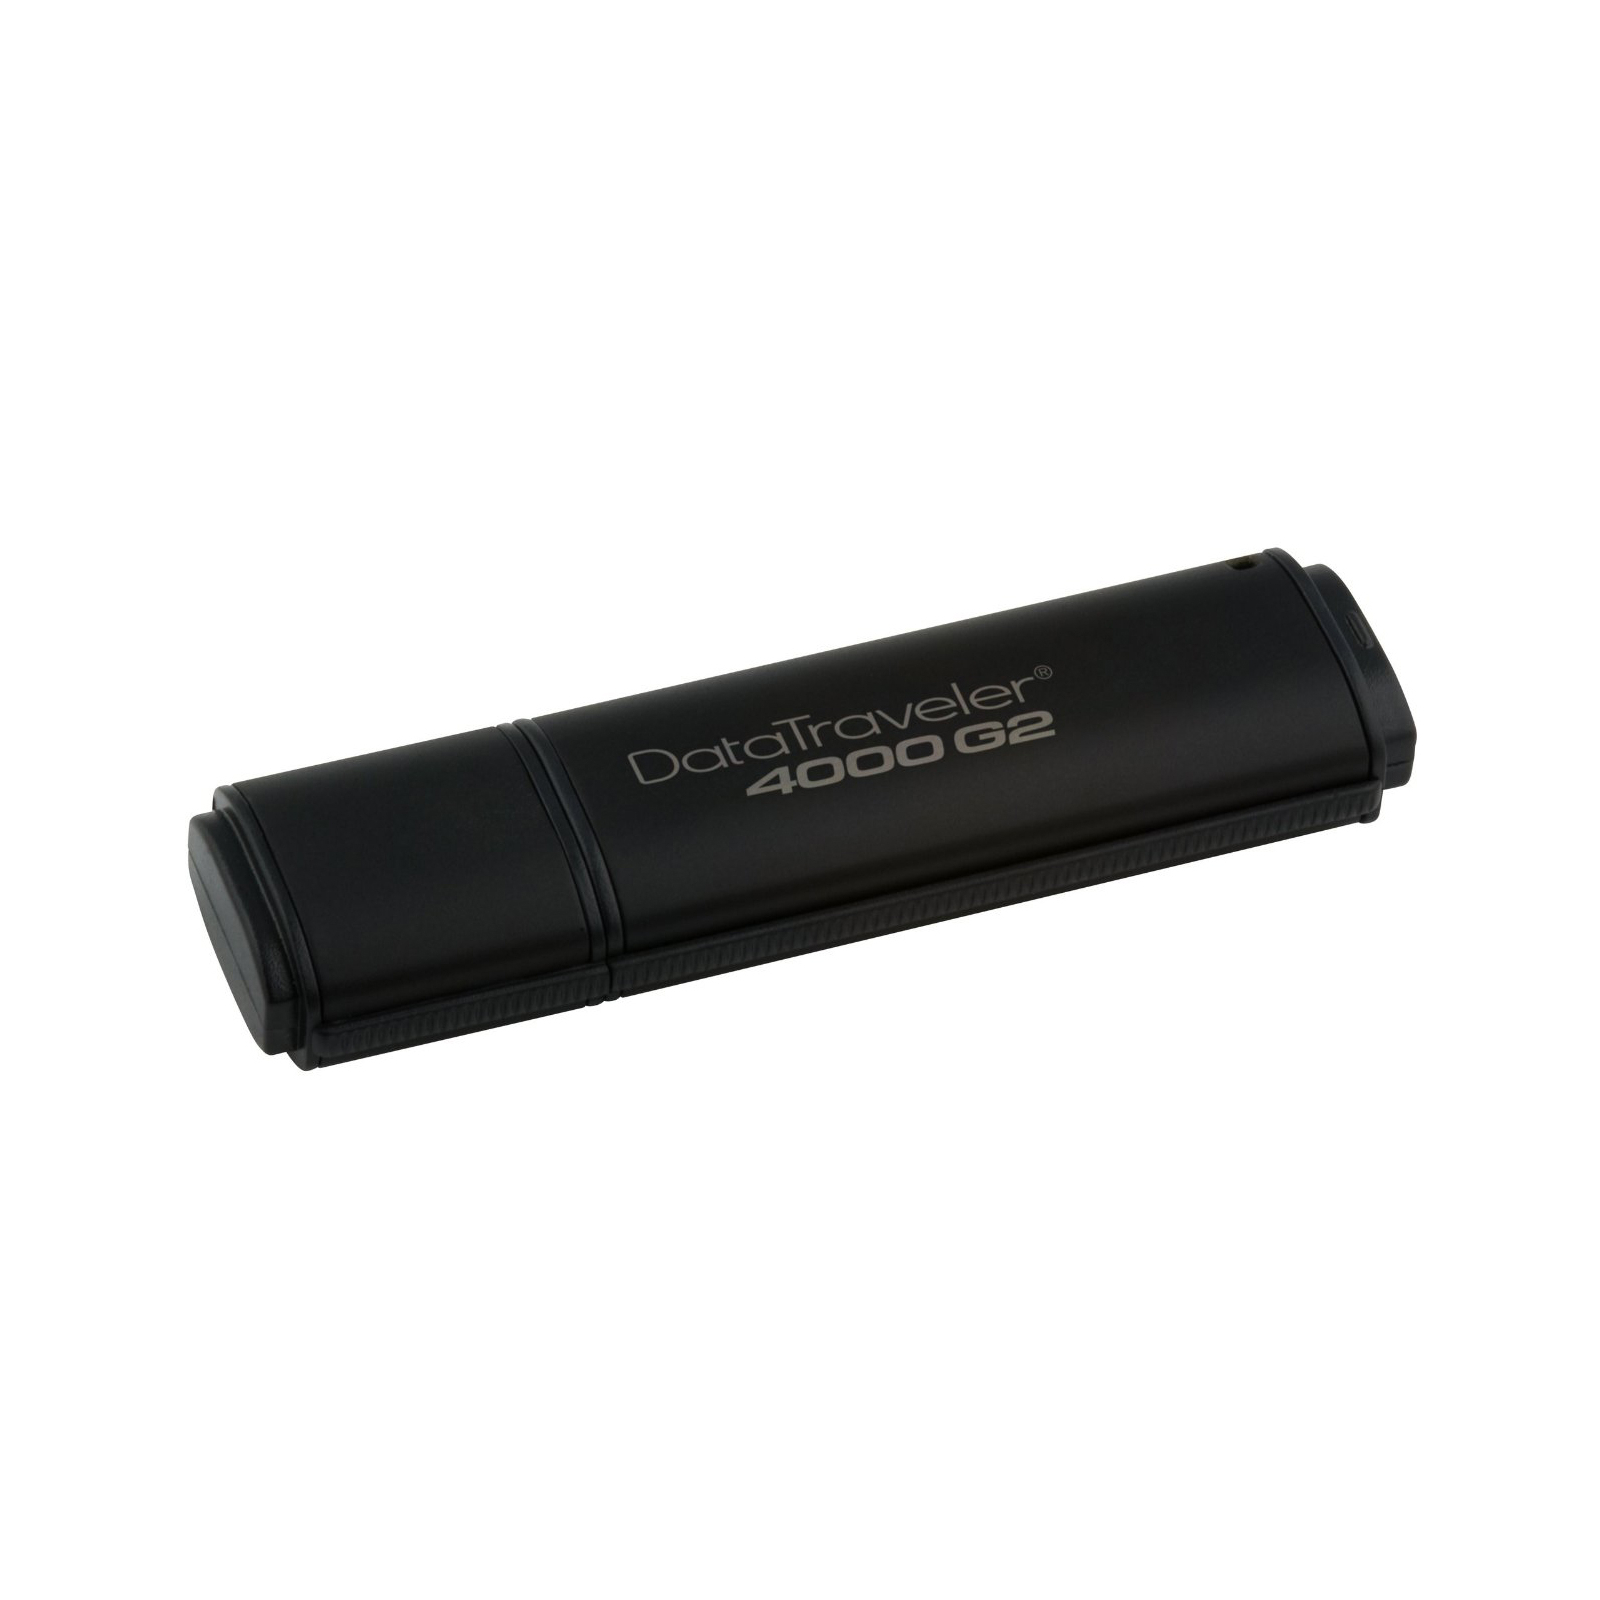 USB флеш накопитель Kingston 64GB DataTraveler 4000 G2 Metal Black USB 3.0 (DT4000G2/64GB) изображение 2